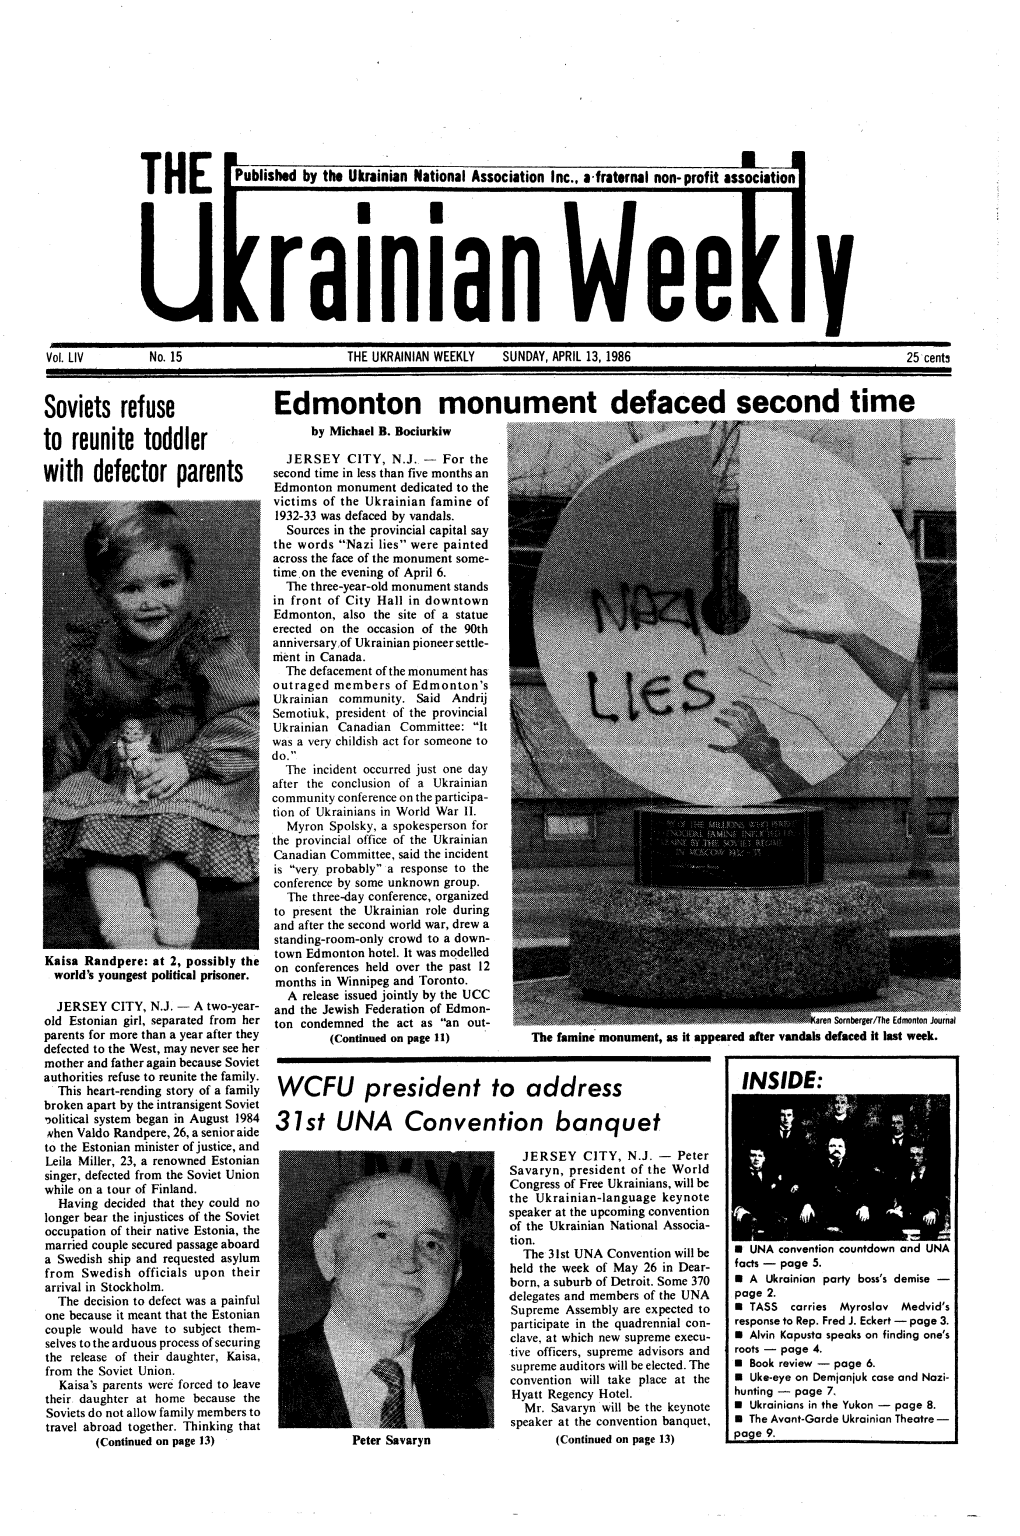 The Ukrainian Weekly 1986, No.15